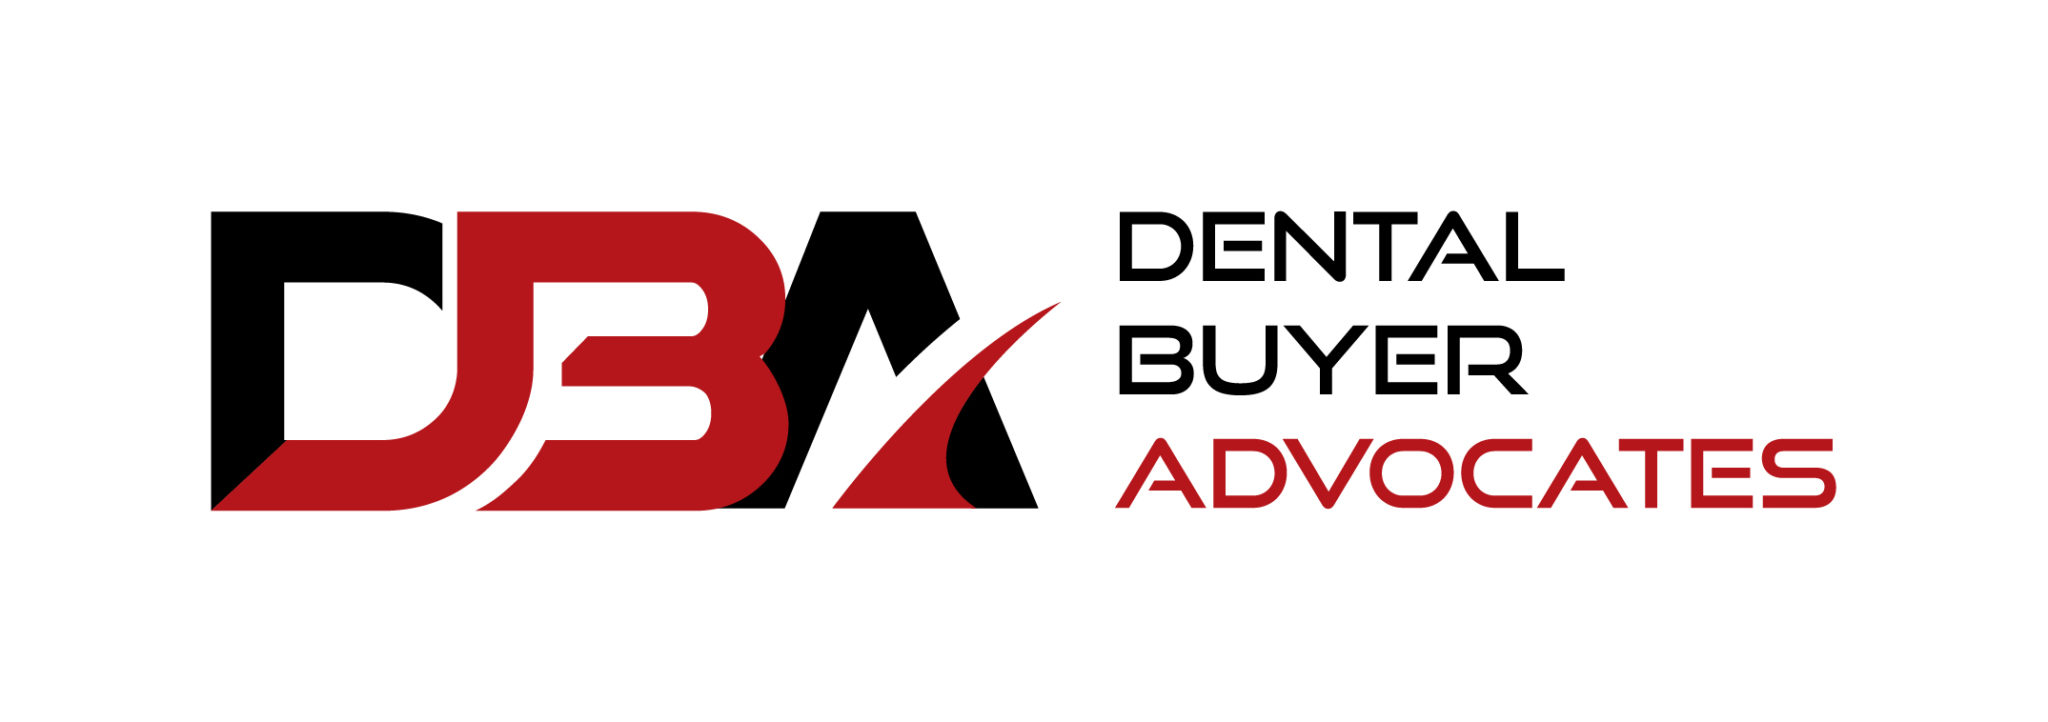 Dental Buyer Advocates